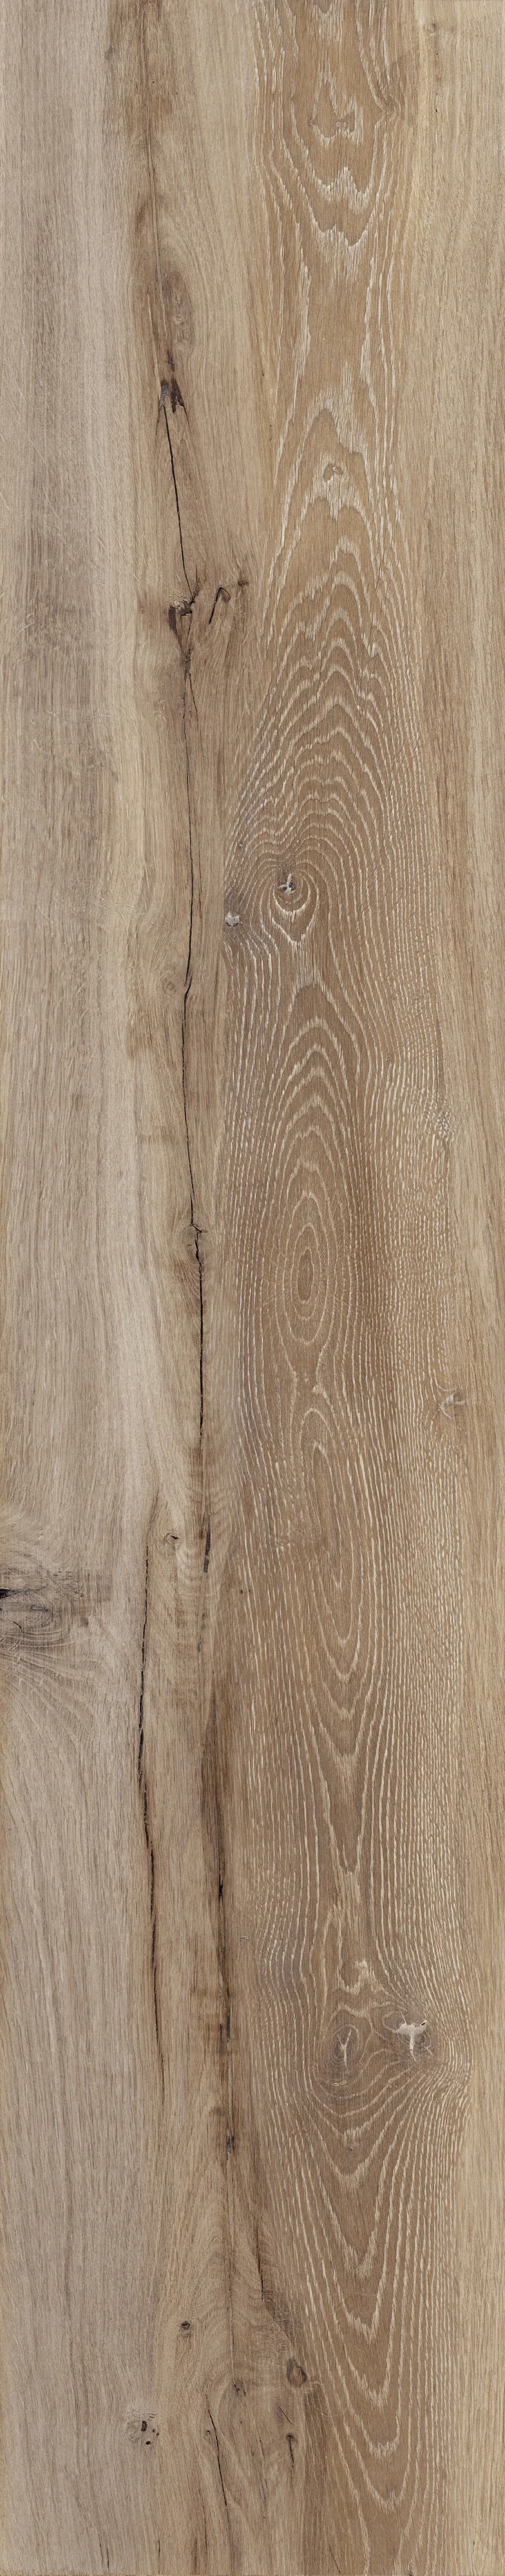 Castelvetro Woodland Oak 20x120 cm